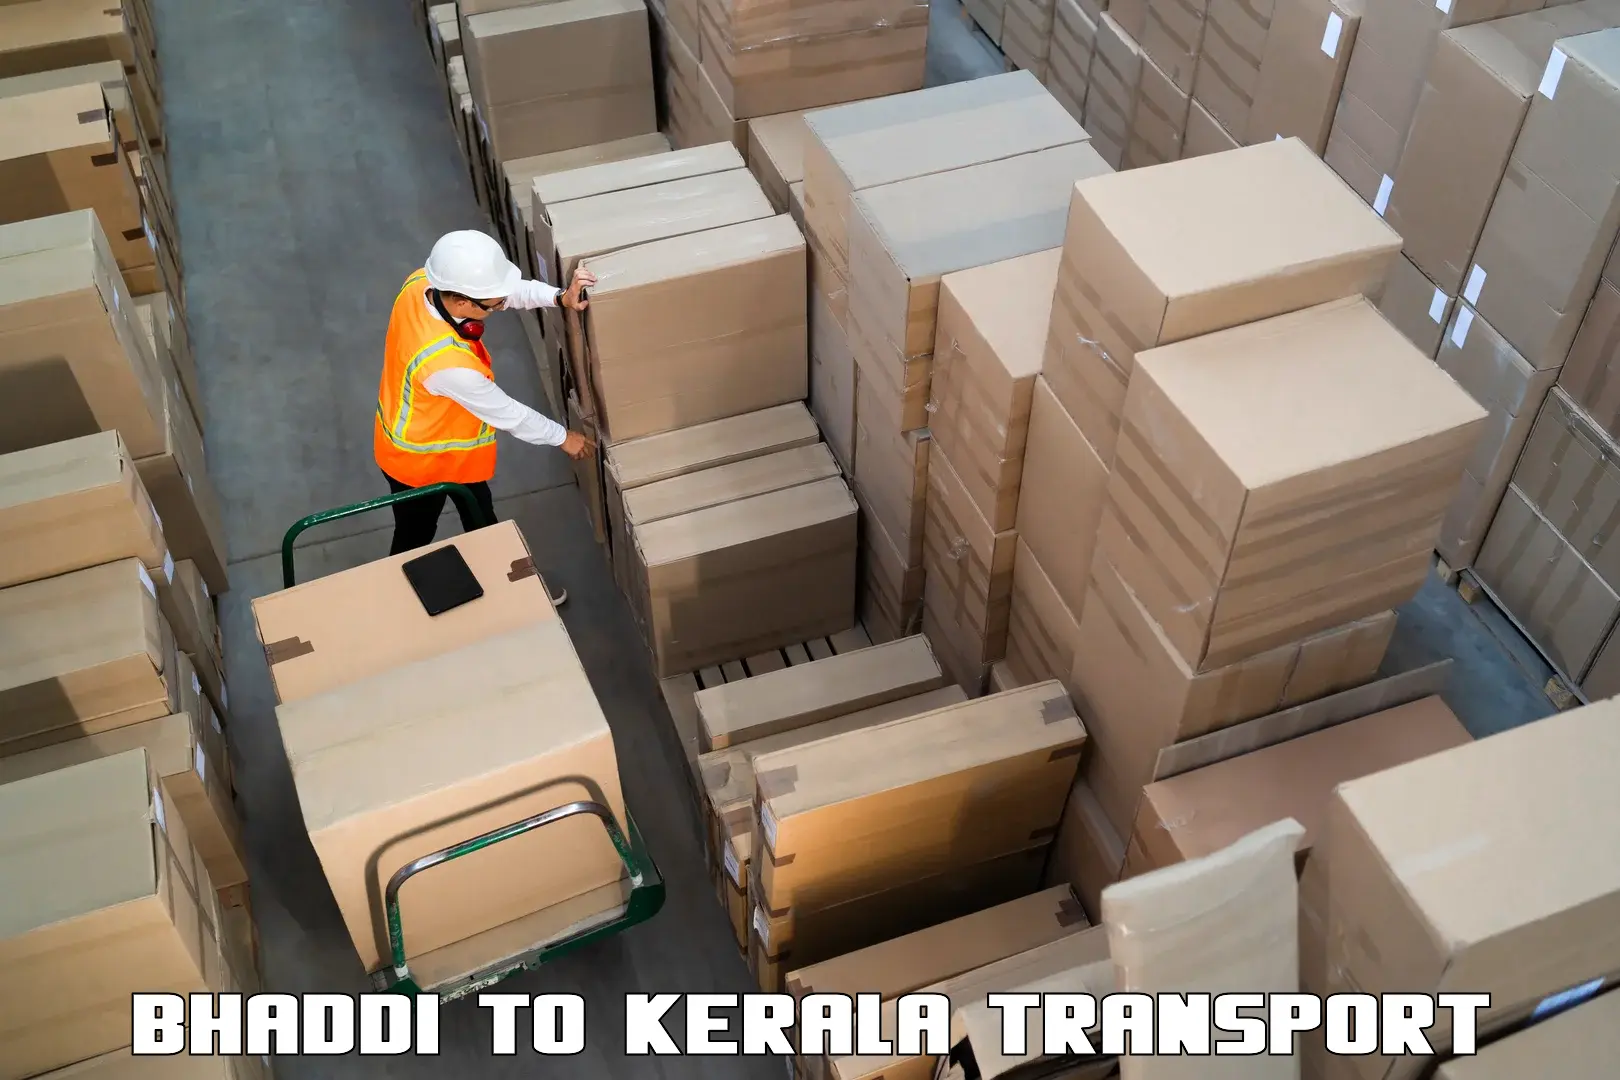 Furniture transport service Bhaddi to Edappal